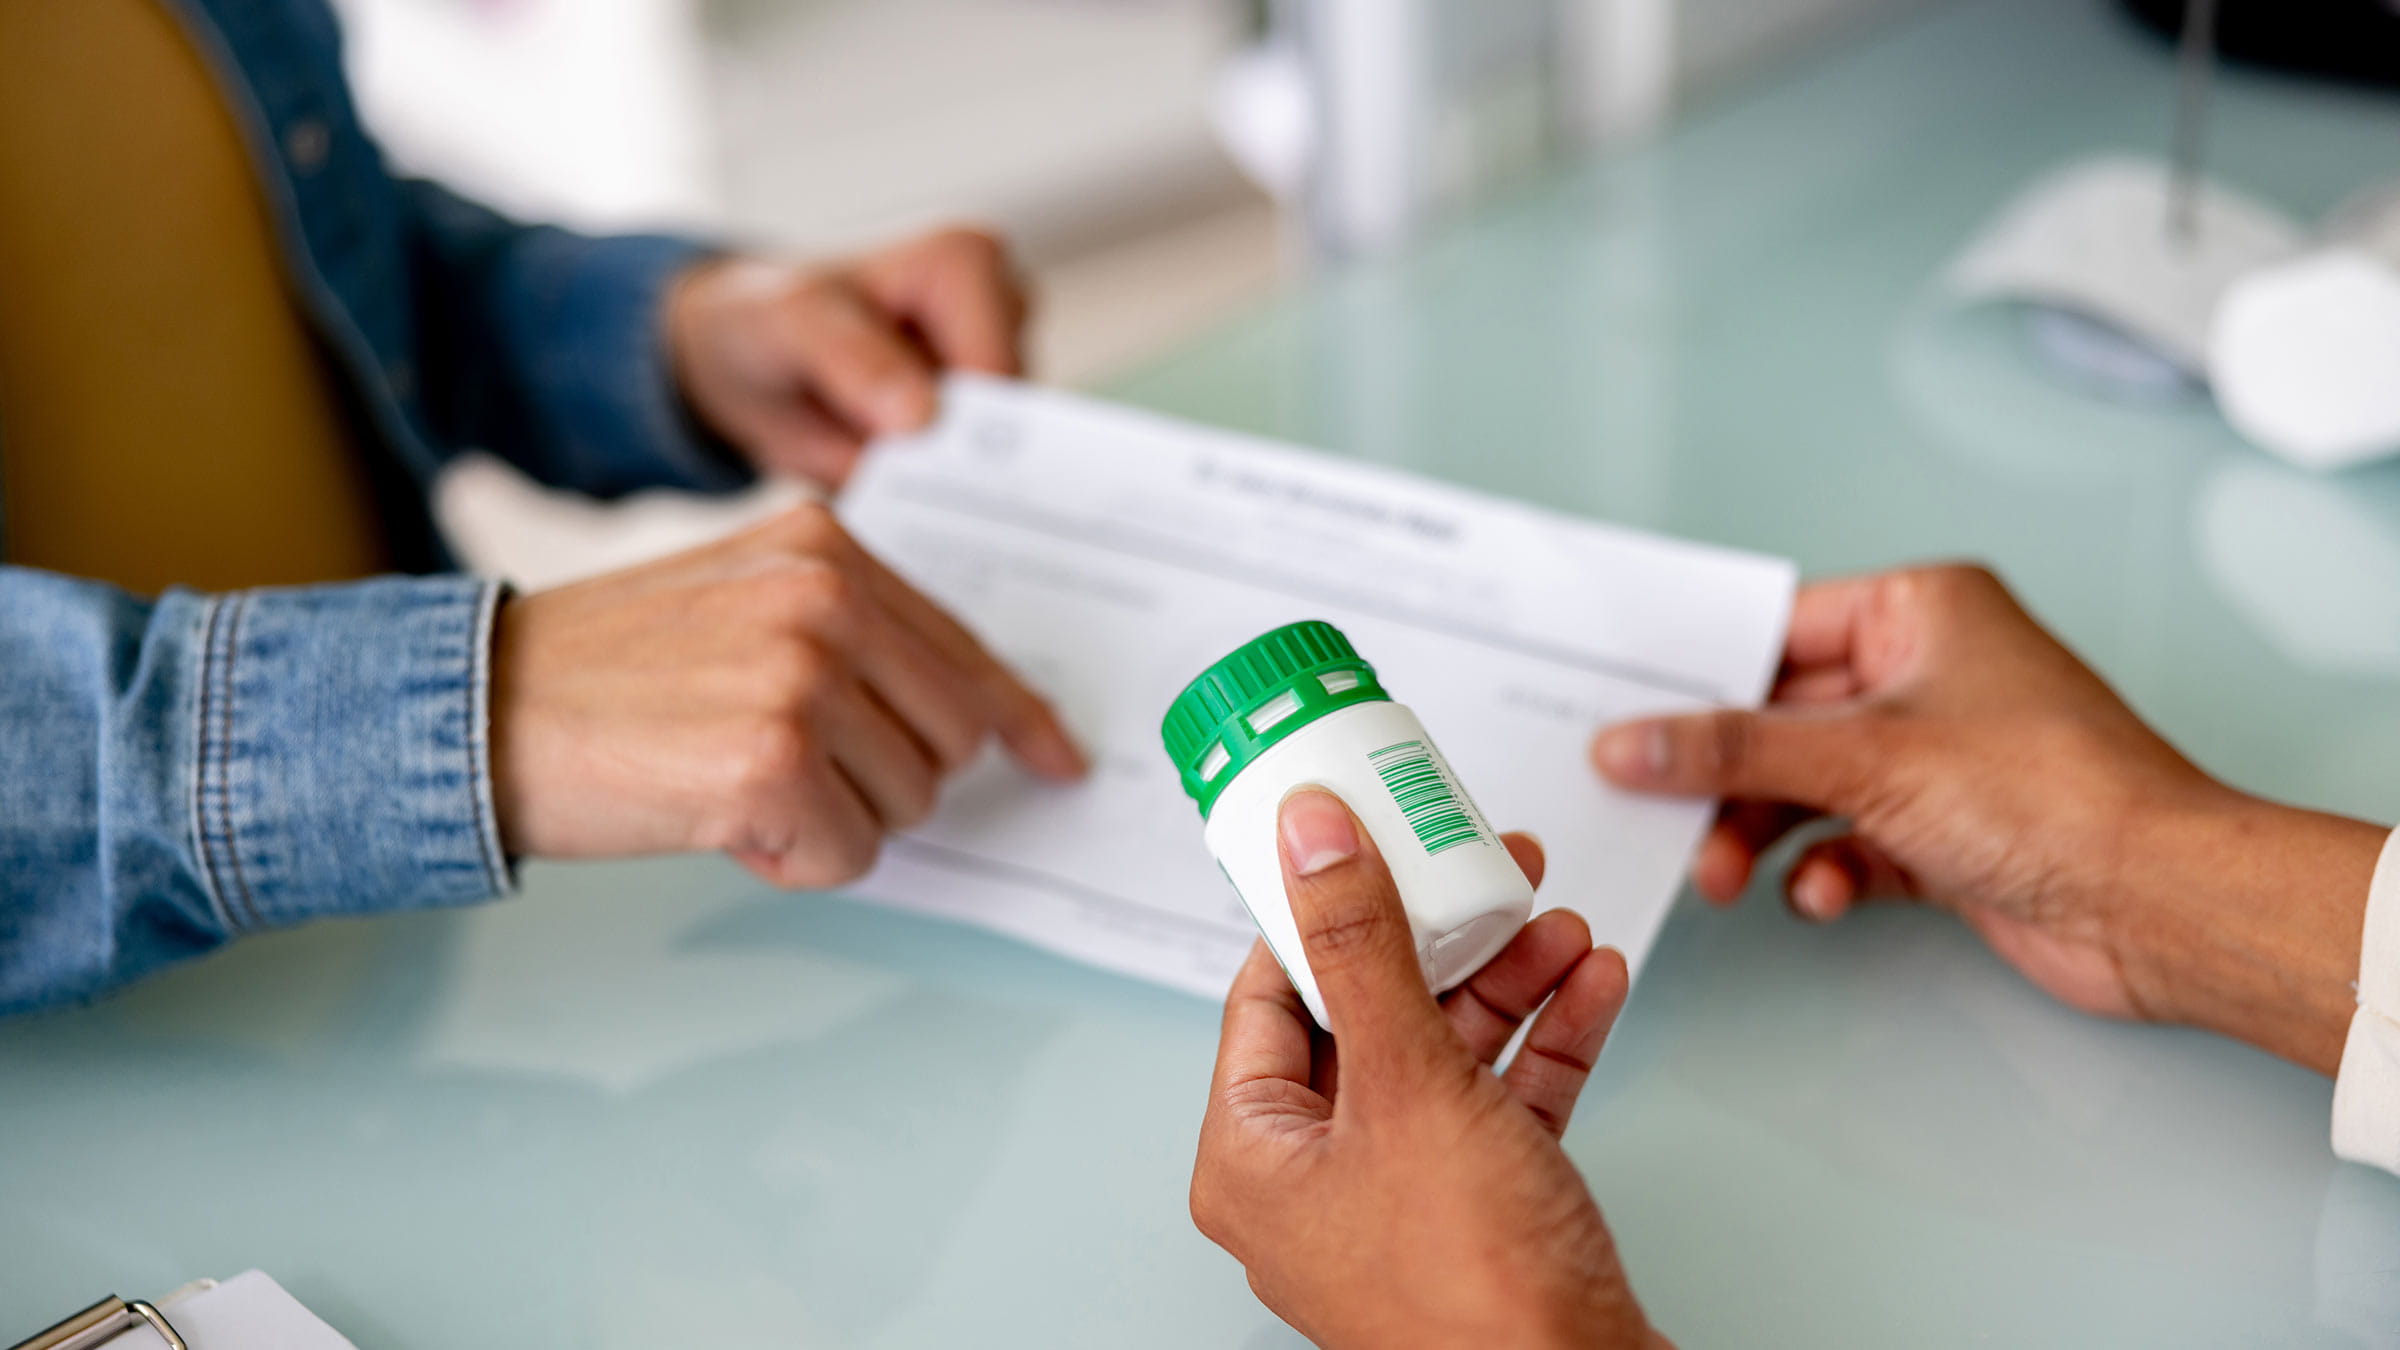 A pharmacist handing medication to a customer